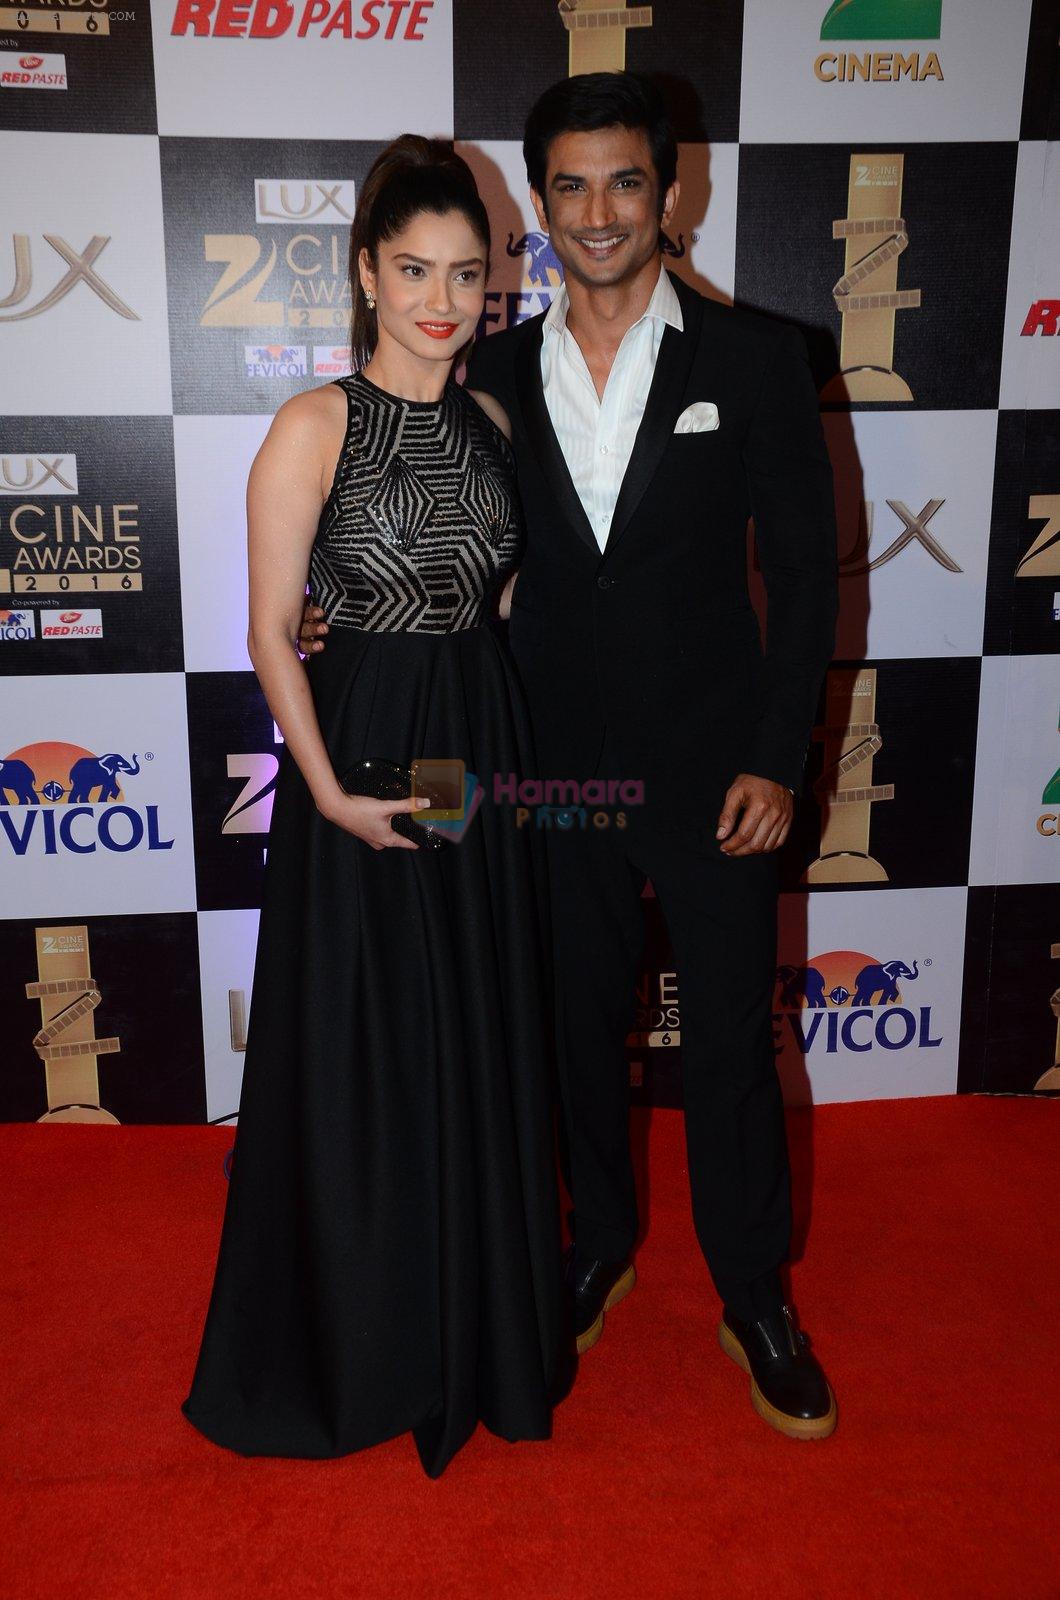 Sushant Singh Rajput, Ankita Lokhande at zee cine awards 2016 on 20th Feb 2016